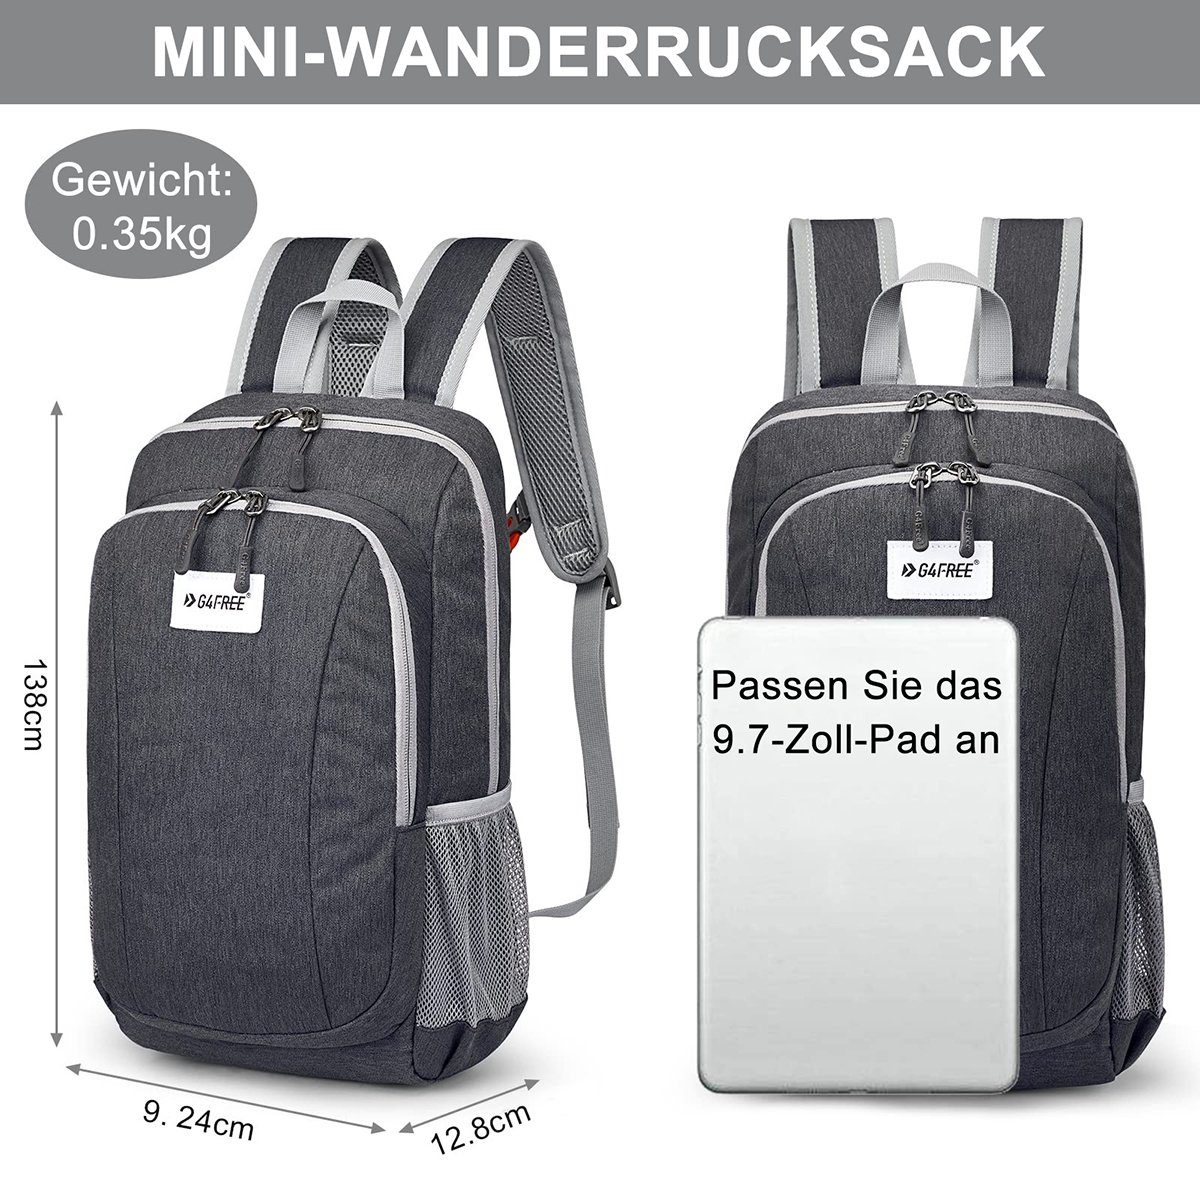 Wanderrucksack, Reiserucksack Mini-Wanderrucksack Schul- Tages- Dunkelgrau G4Free